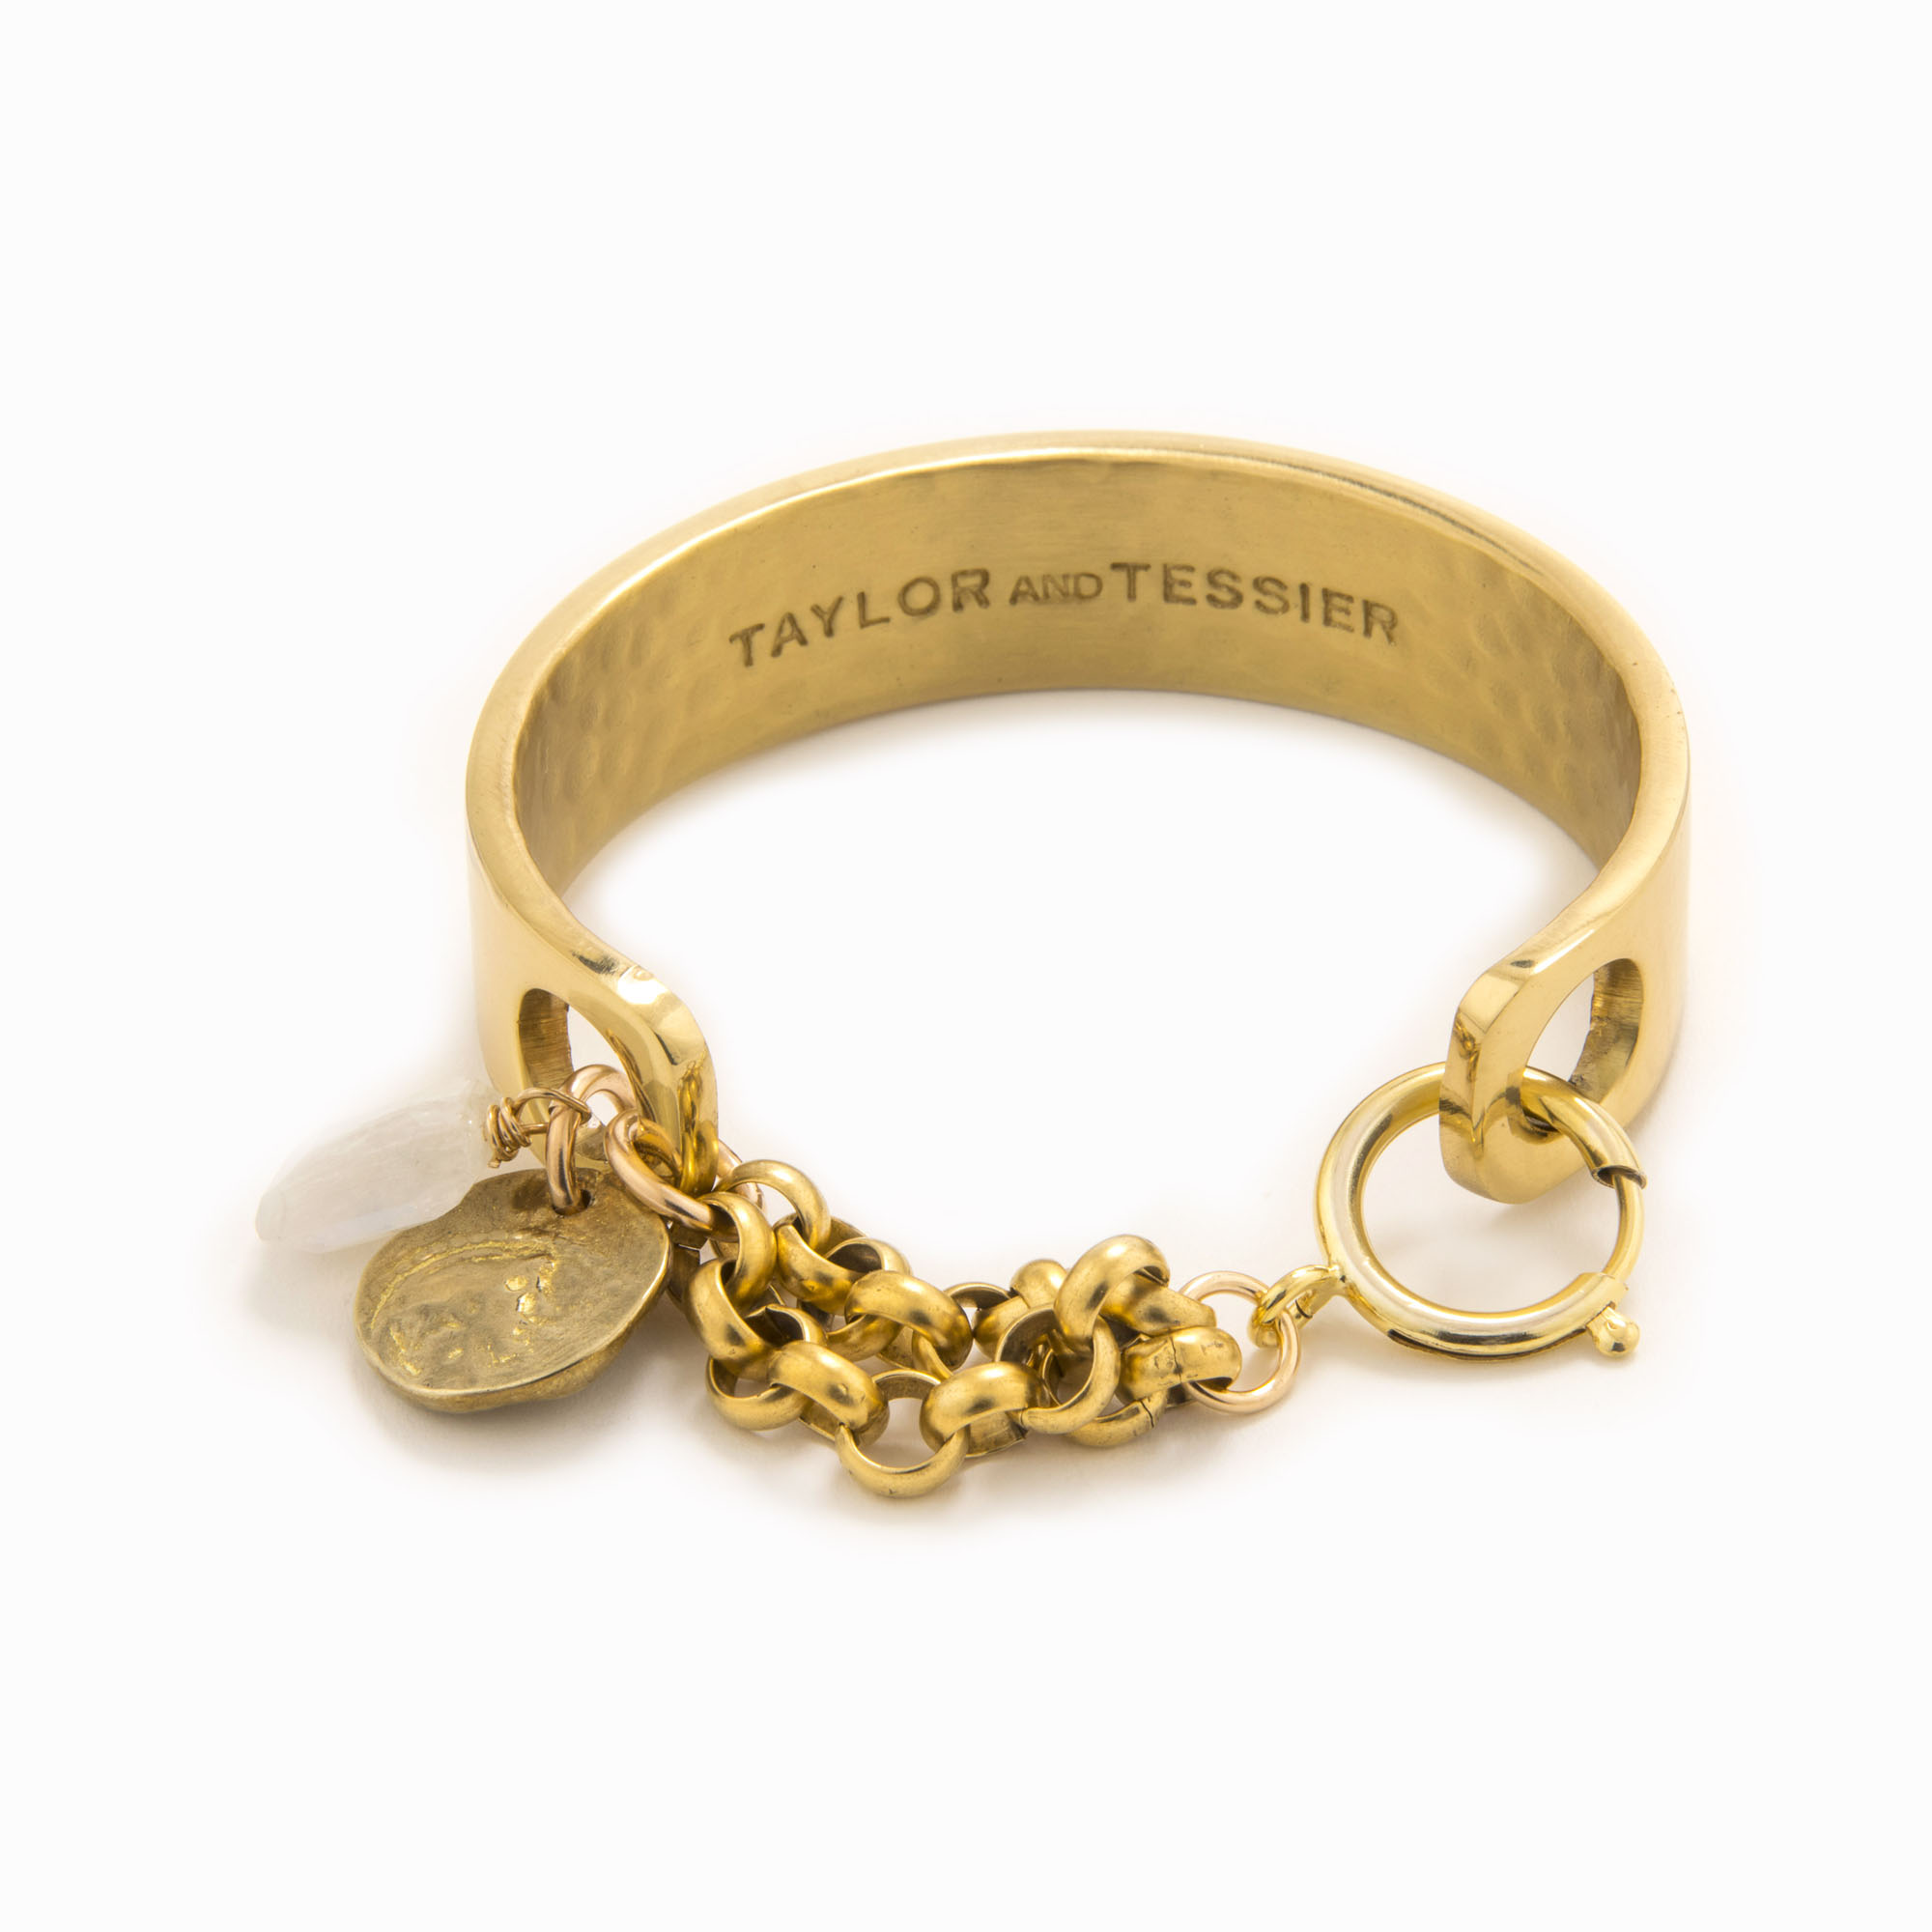 Featured image for “Cava Brass Bracelet”